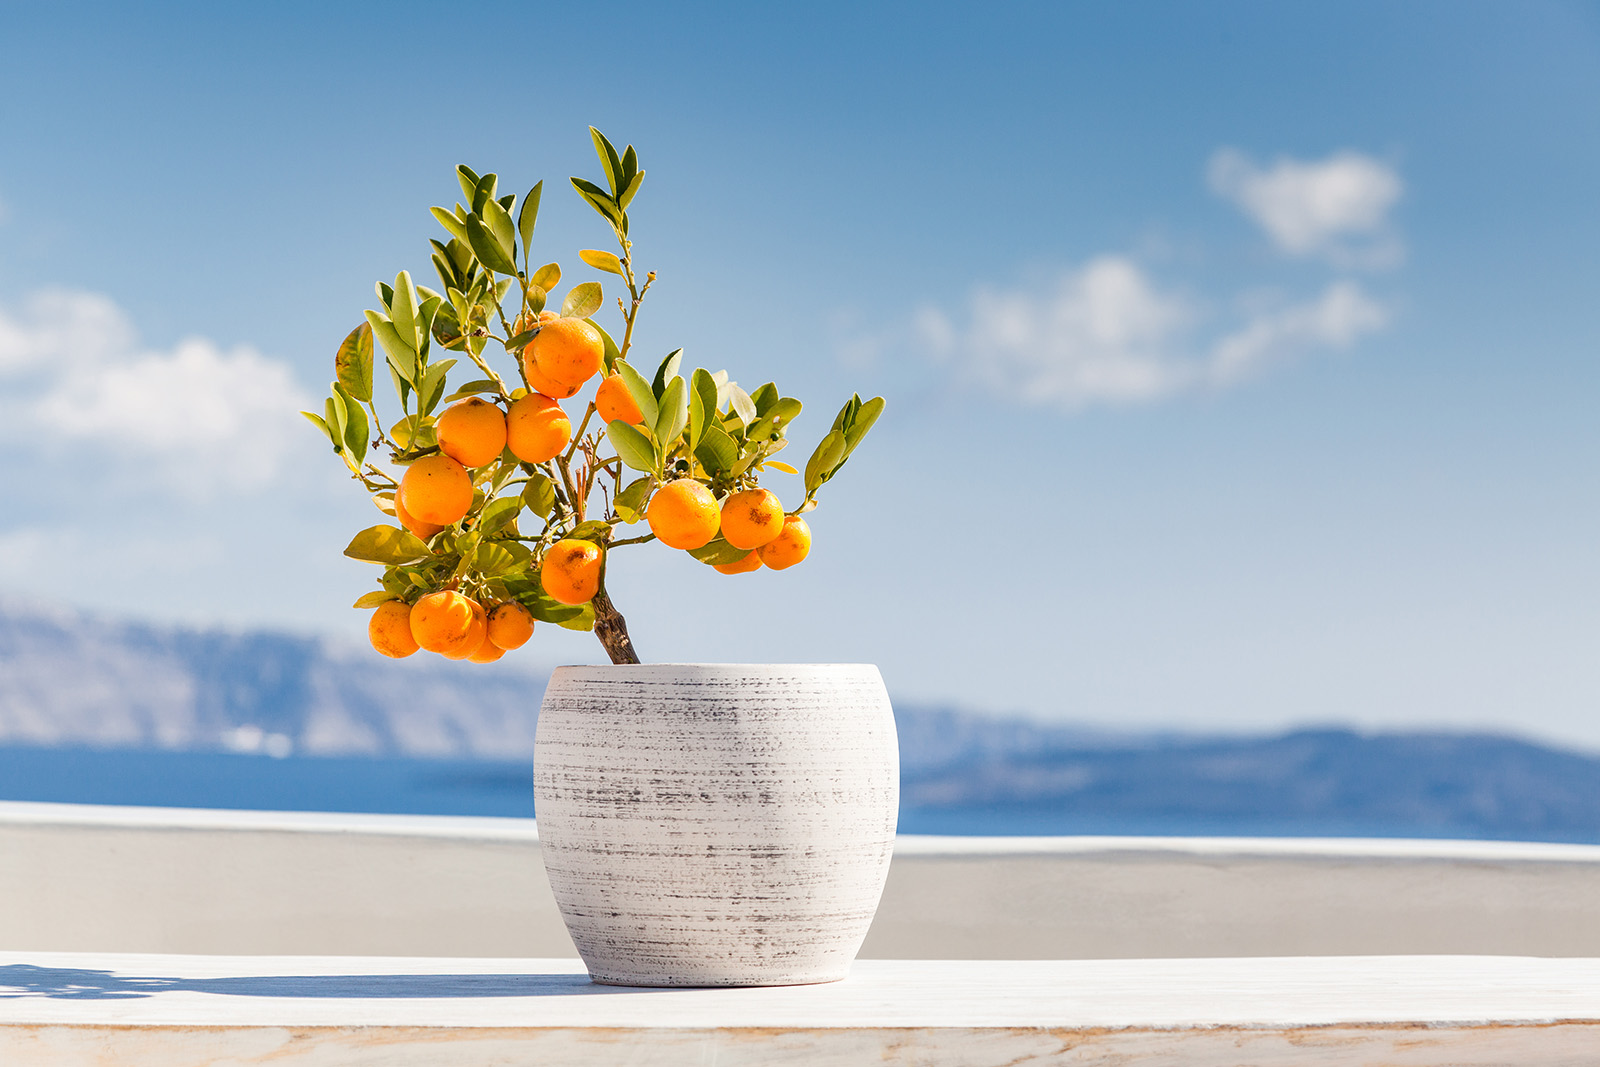 Oranger dans un pot au soleil. © Melinda Nagy, Adobe Stock